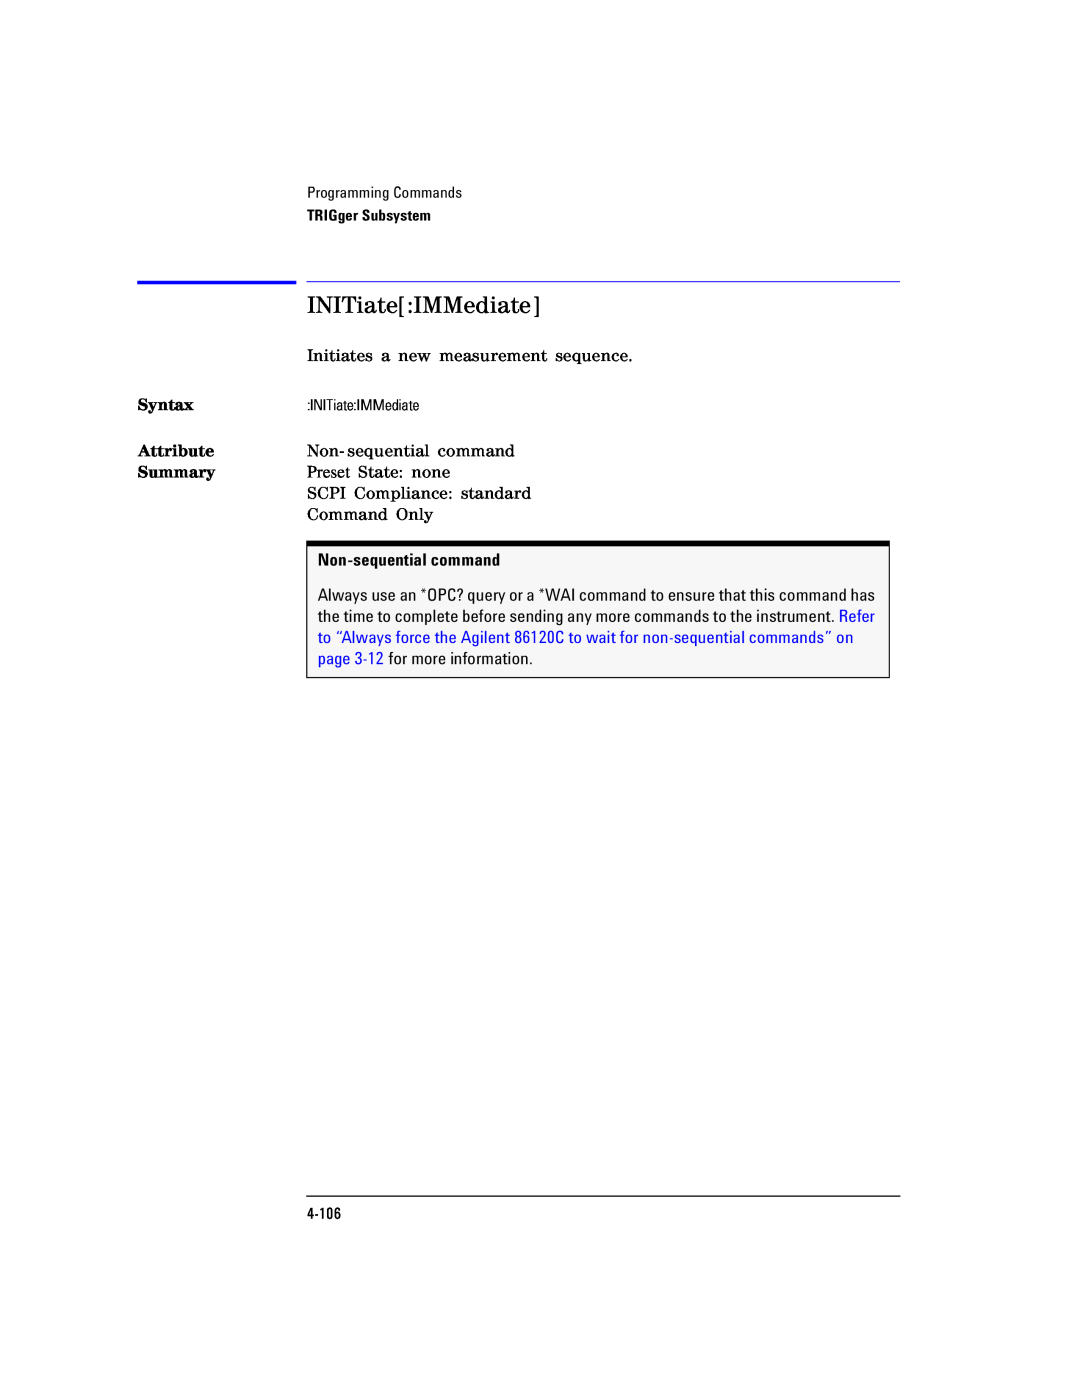 Agilent Technologies Agilent 86120C manual INITiateIMMediate, Syntax, Attribute, Summary, Non-sequential command 